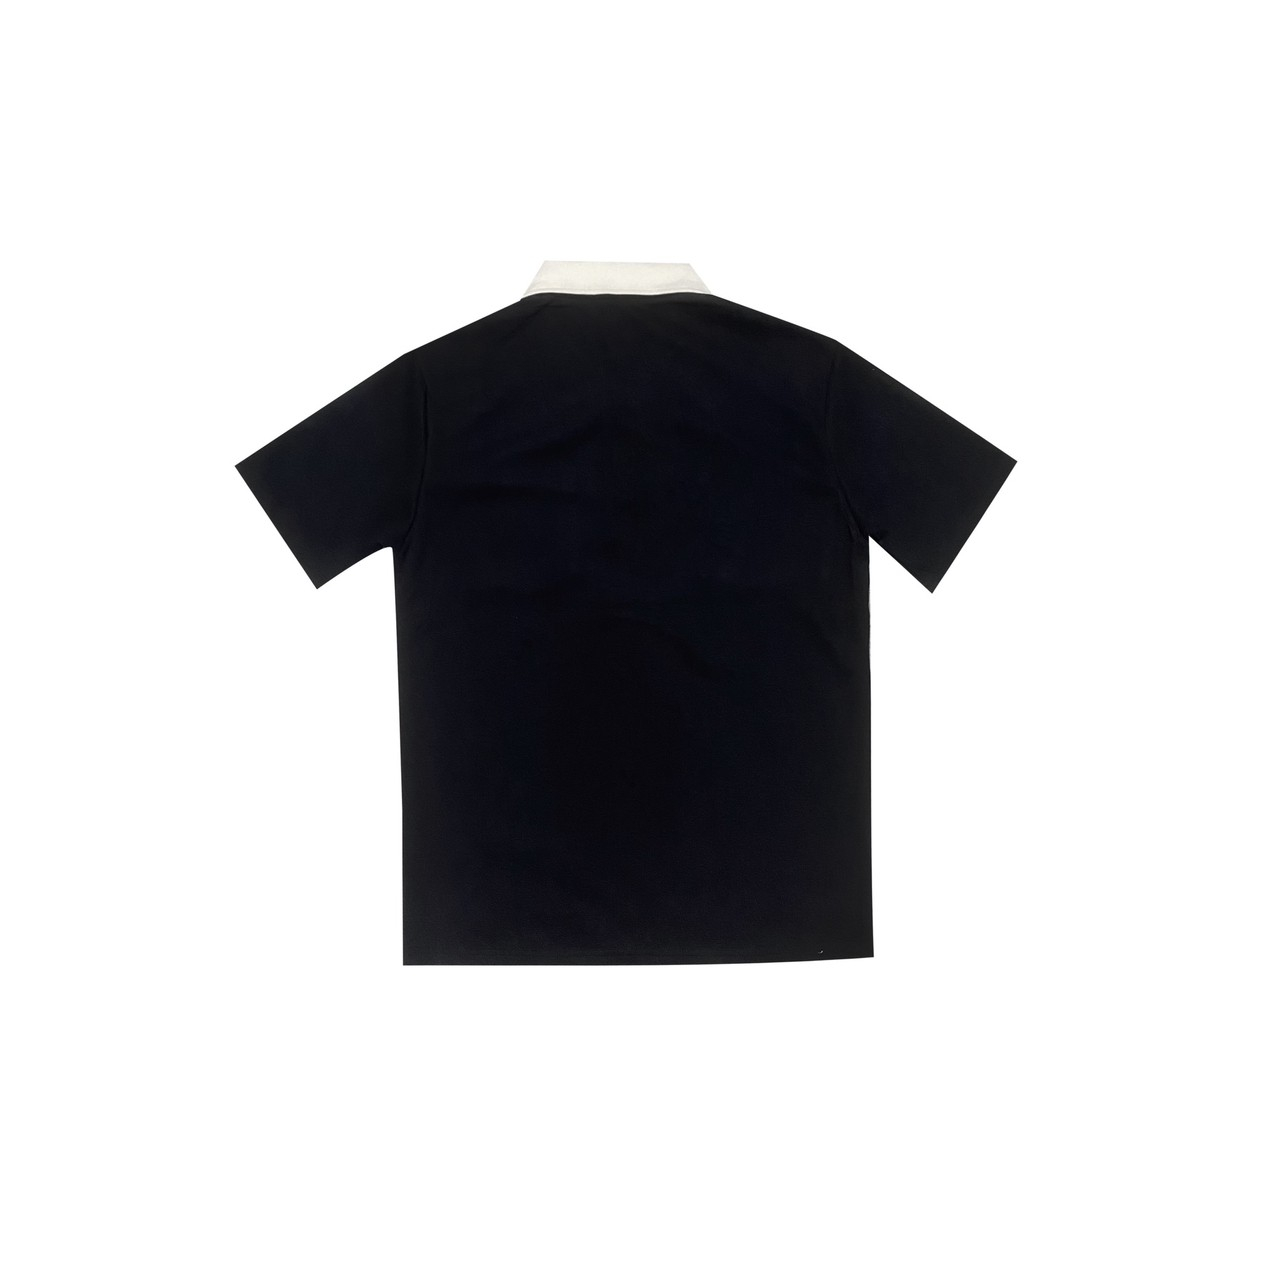 Two-Tone Polo Shirt (Black)